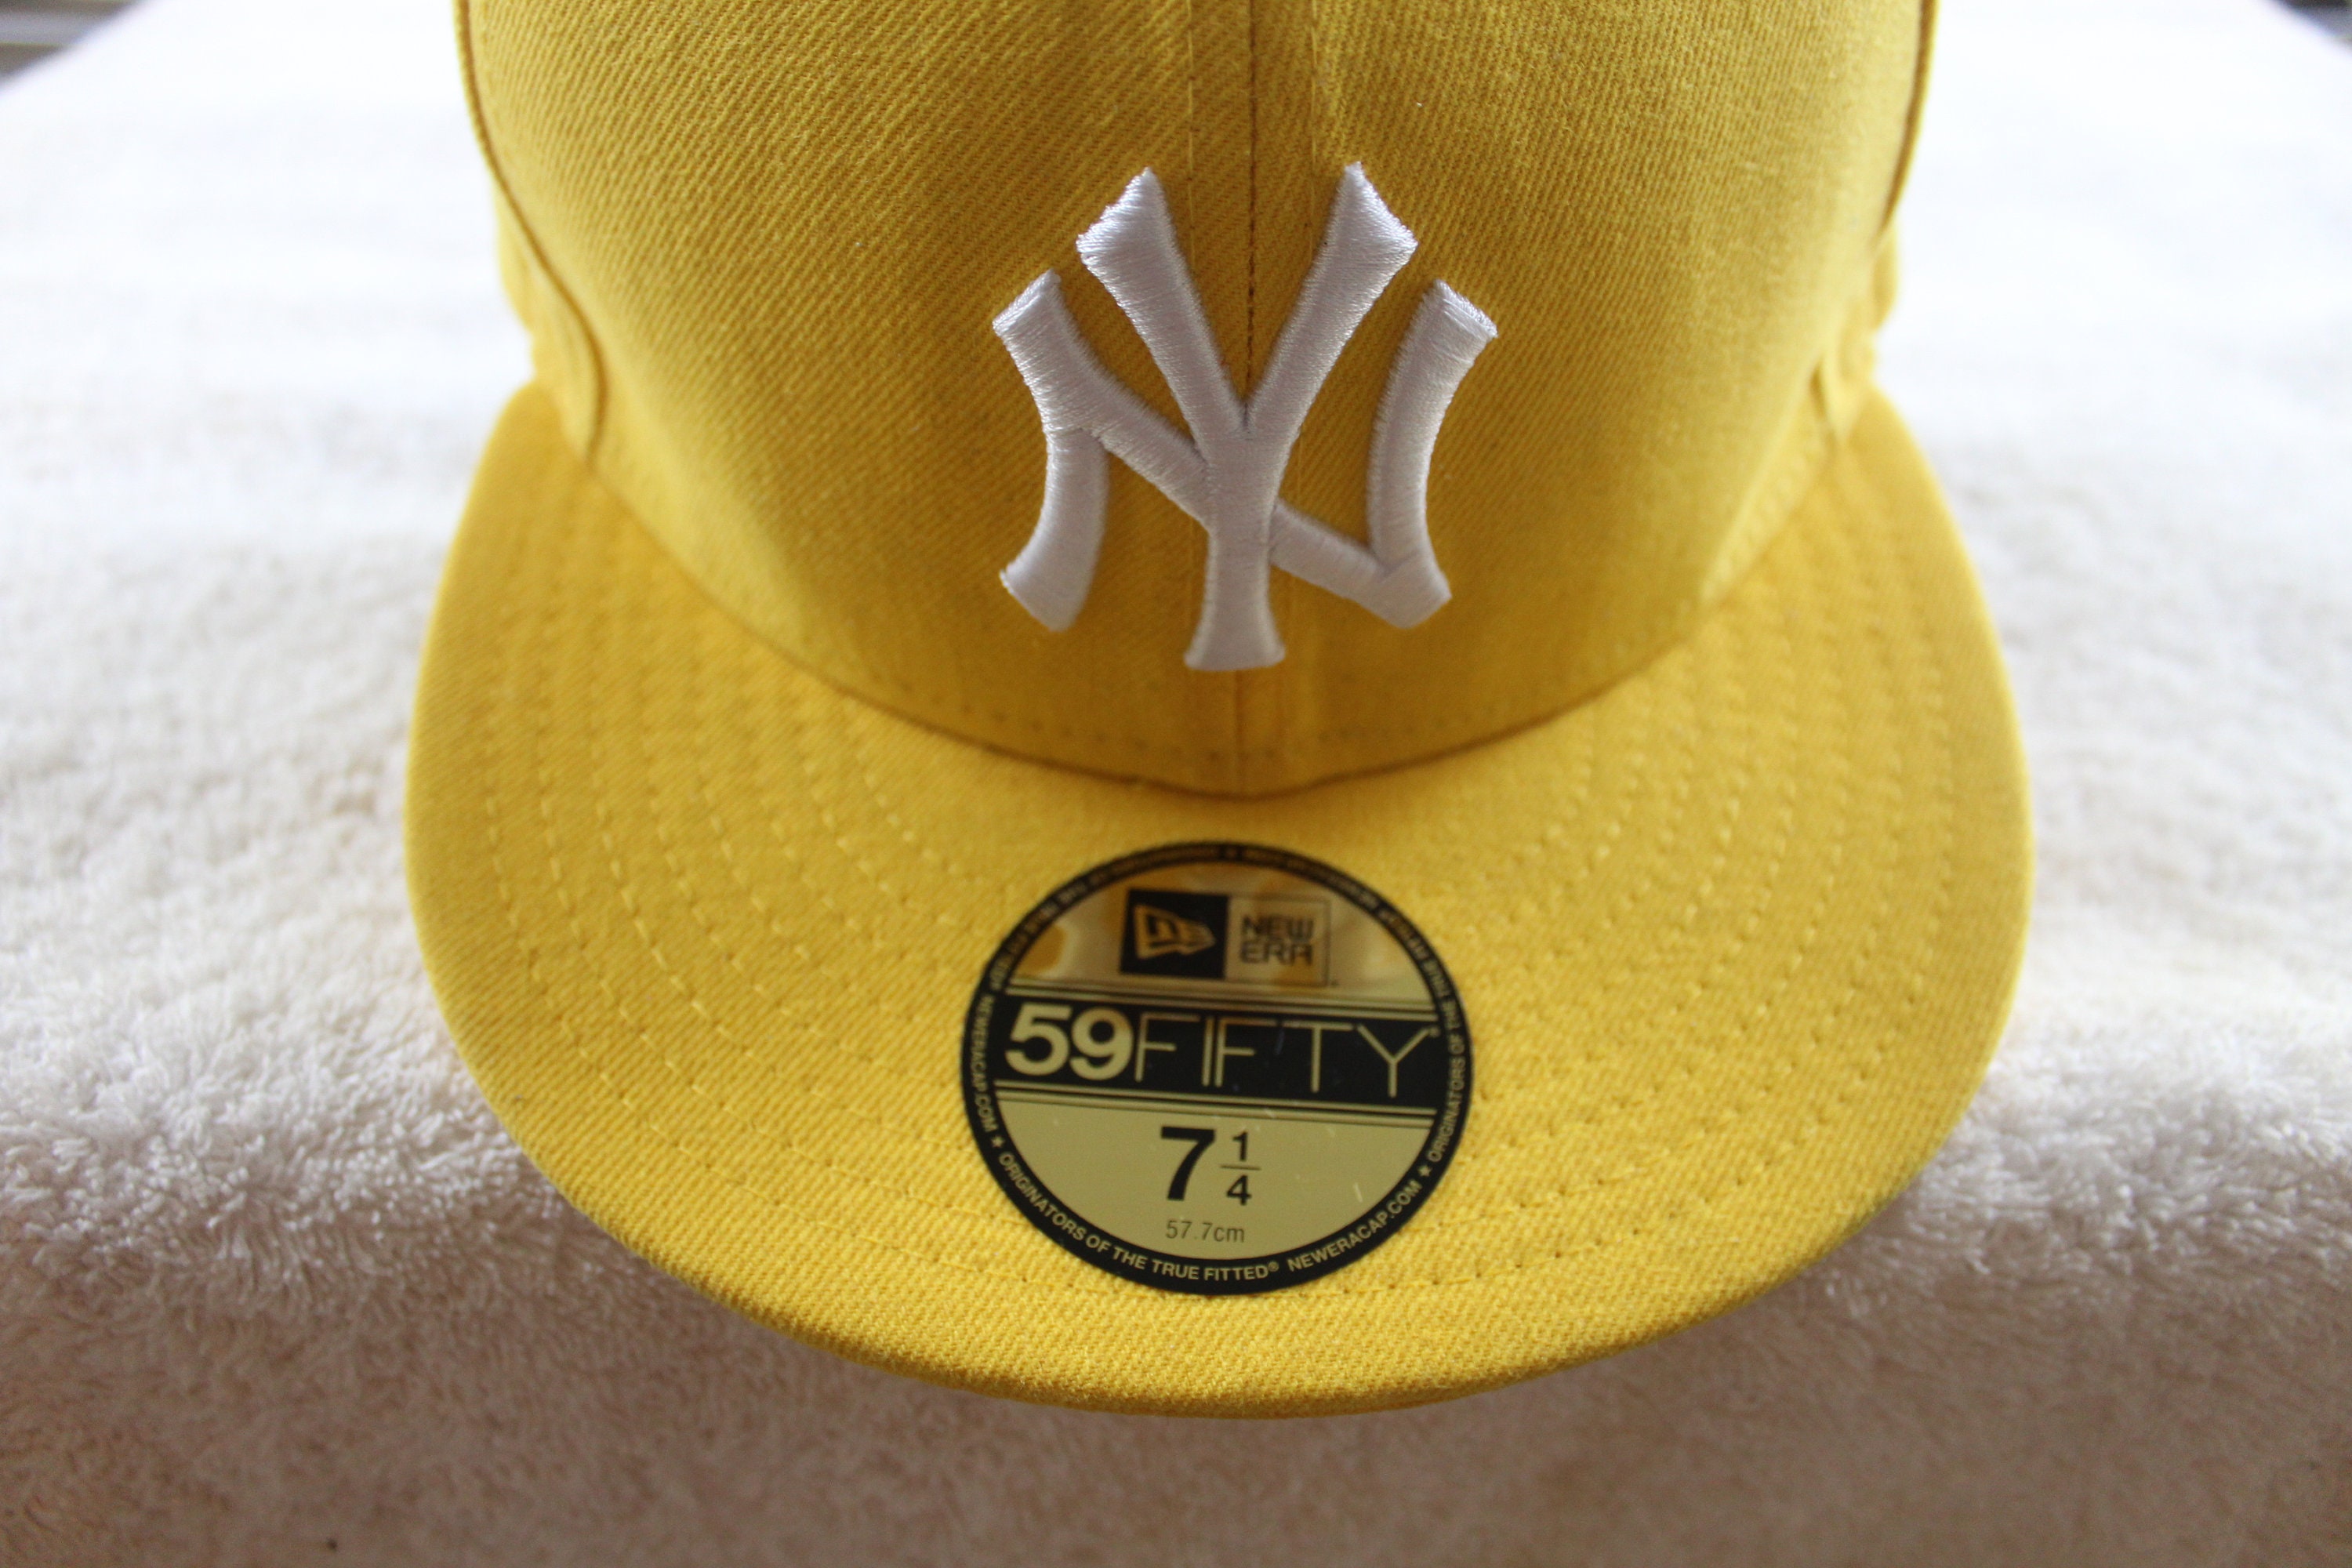 LOX New York Yankees 59FIFTY New Era Fitted D Block Bad Boy Ruff Ryders  Rocafella Hat Club 